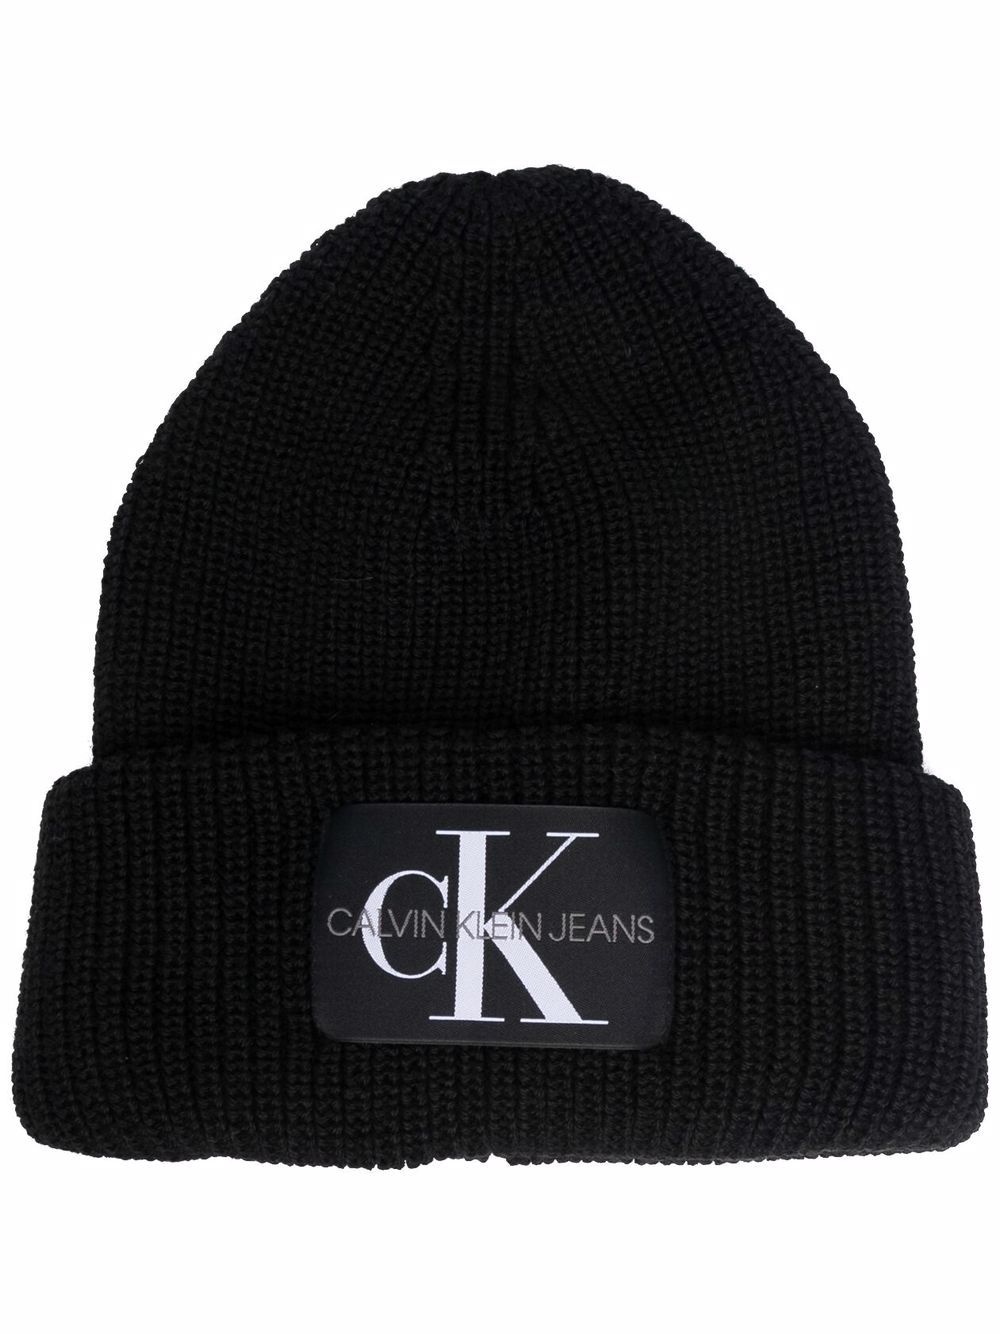 фото Calvin klein шапка бини крупной вязки с логотипом